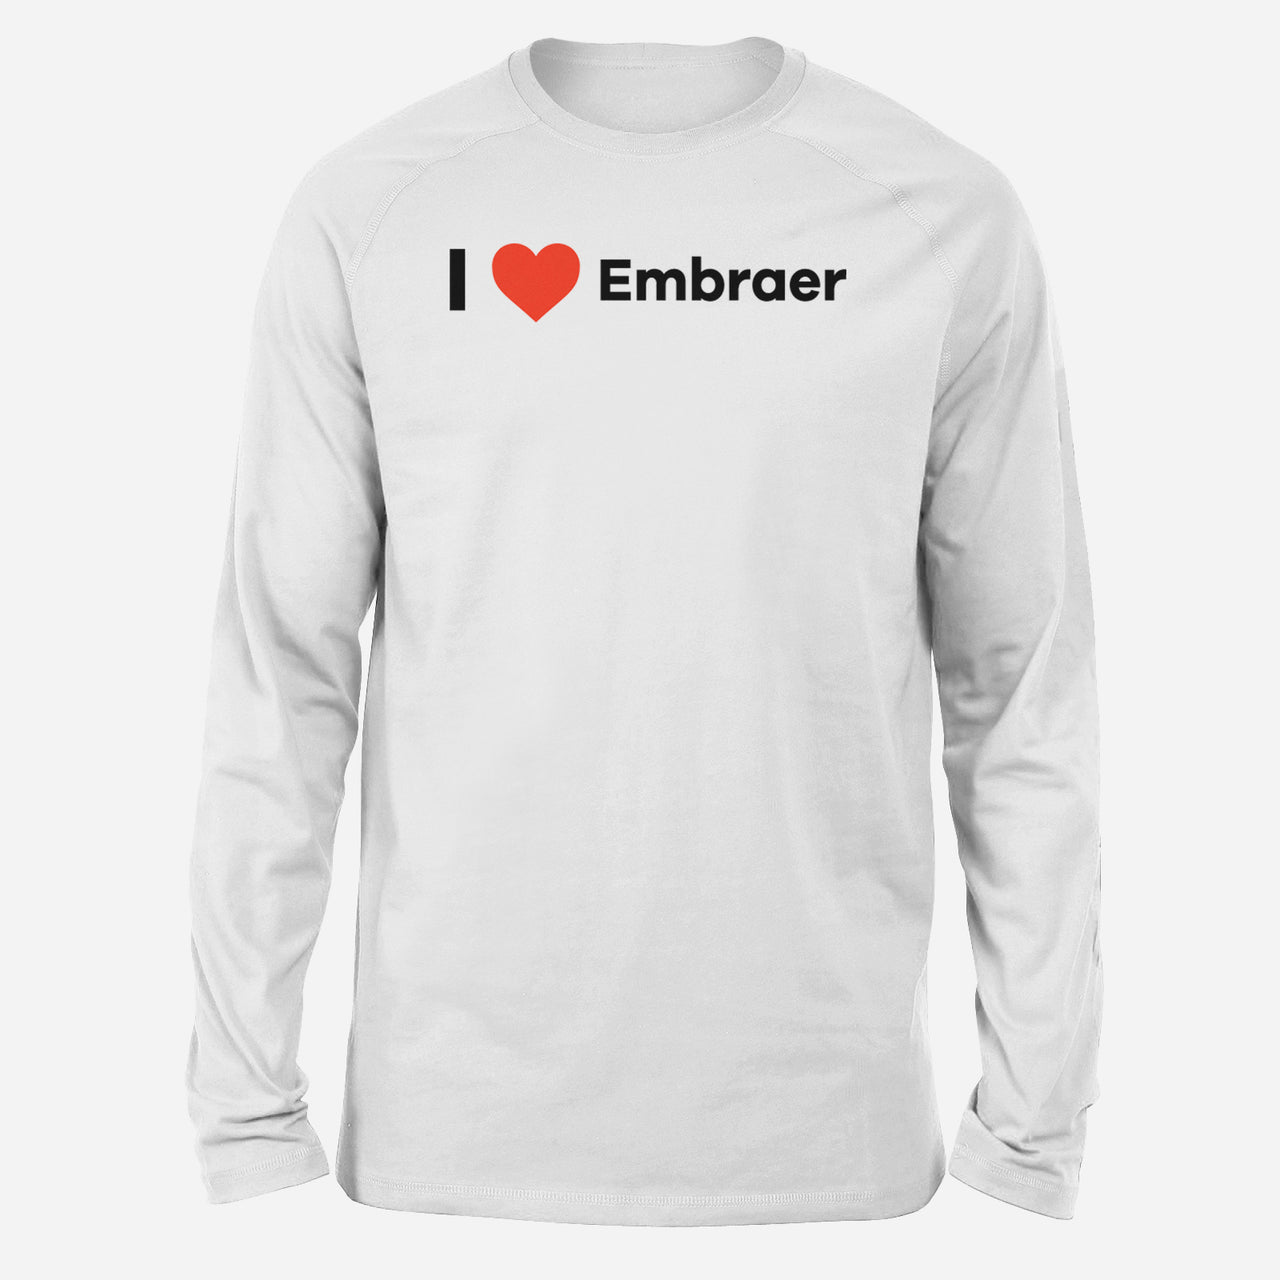 I Love Embraer Designed Long-Sleeve T-Shirts